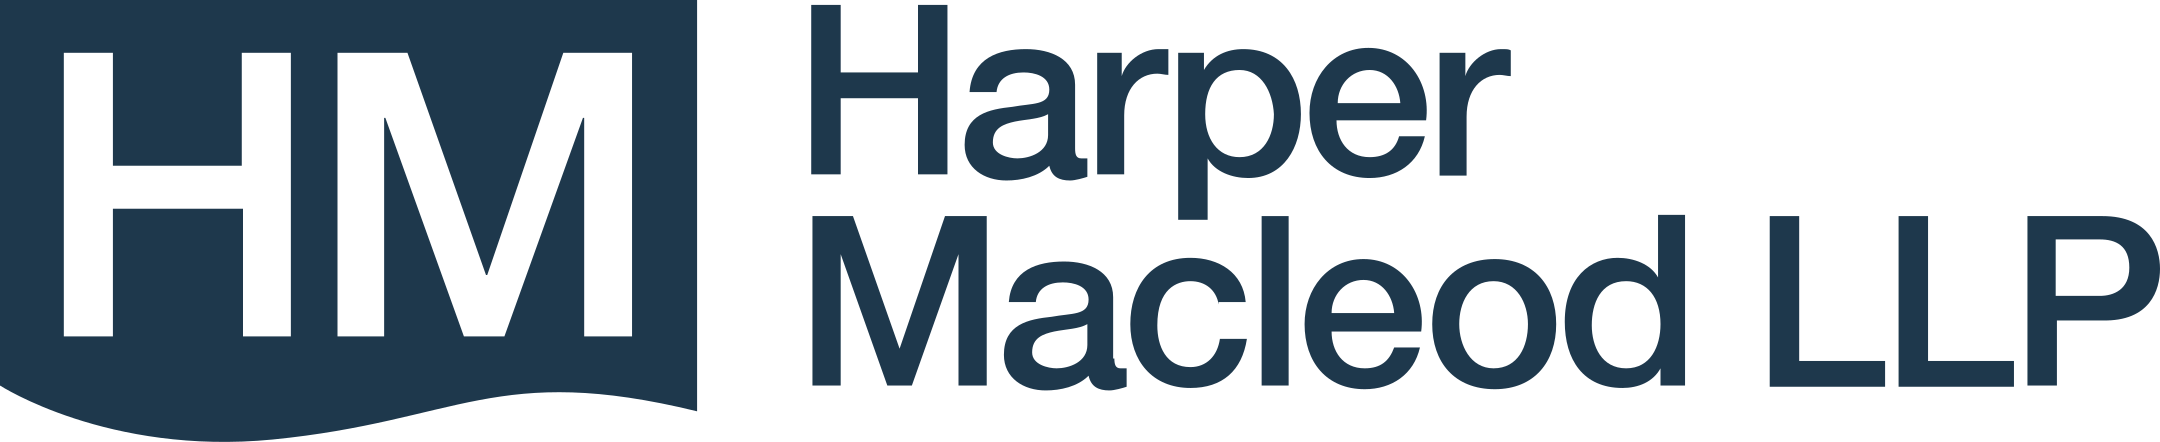 Harper Macleod LLP